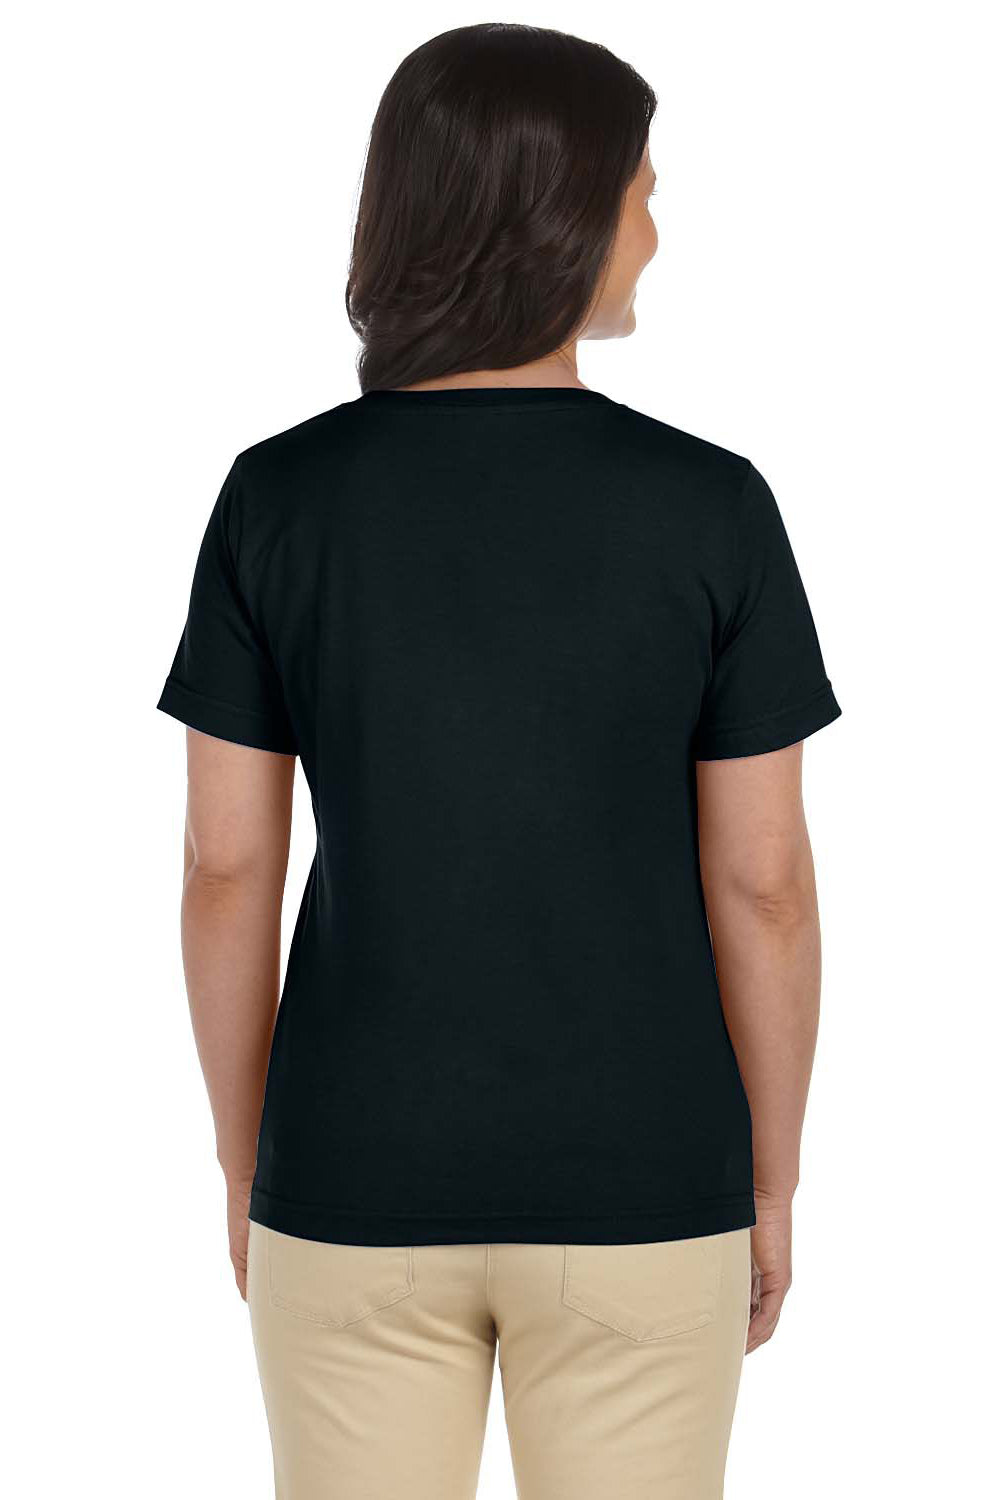 LAT L-3587 Womens Premium Jersey Short Sleeve V-Neck T-Shirt Black Back